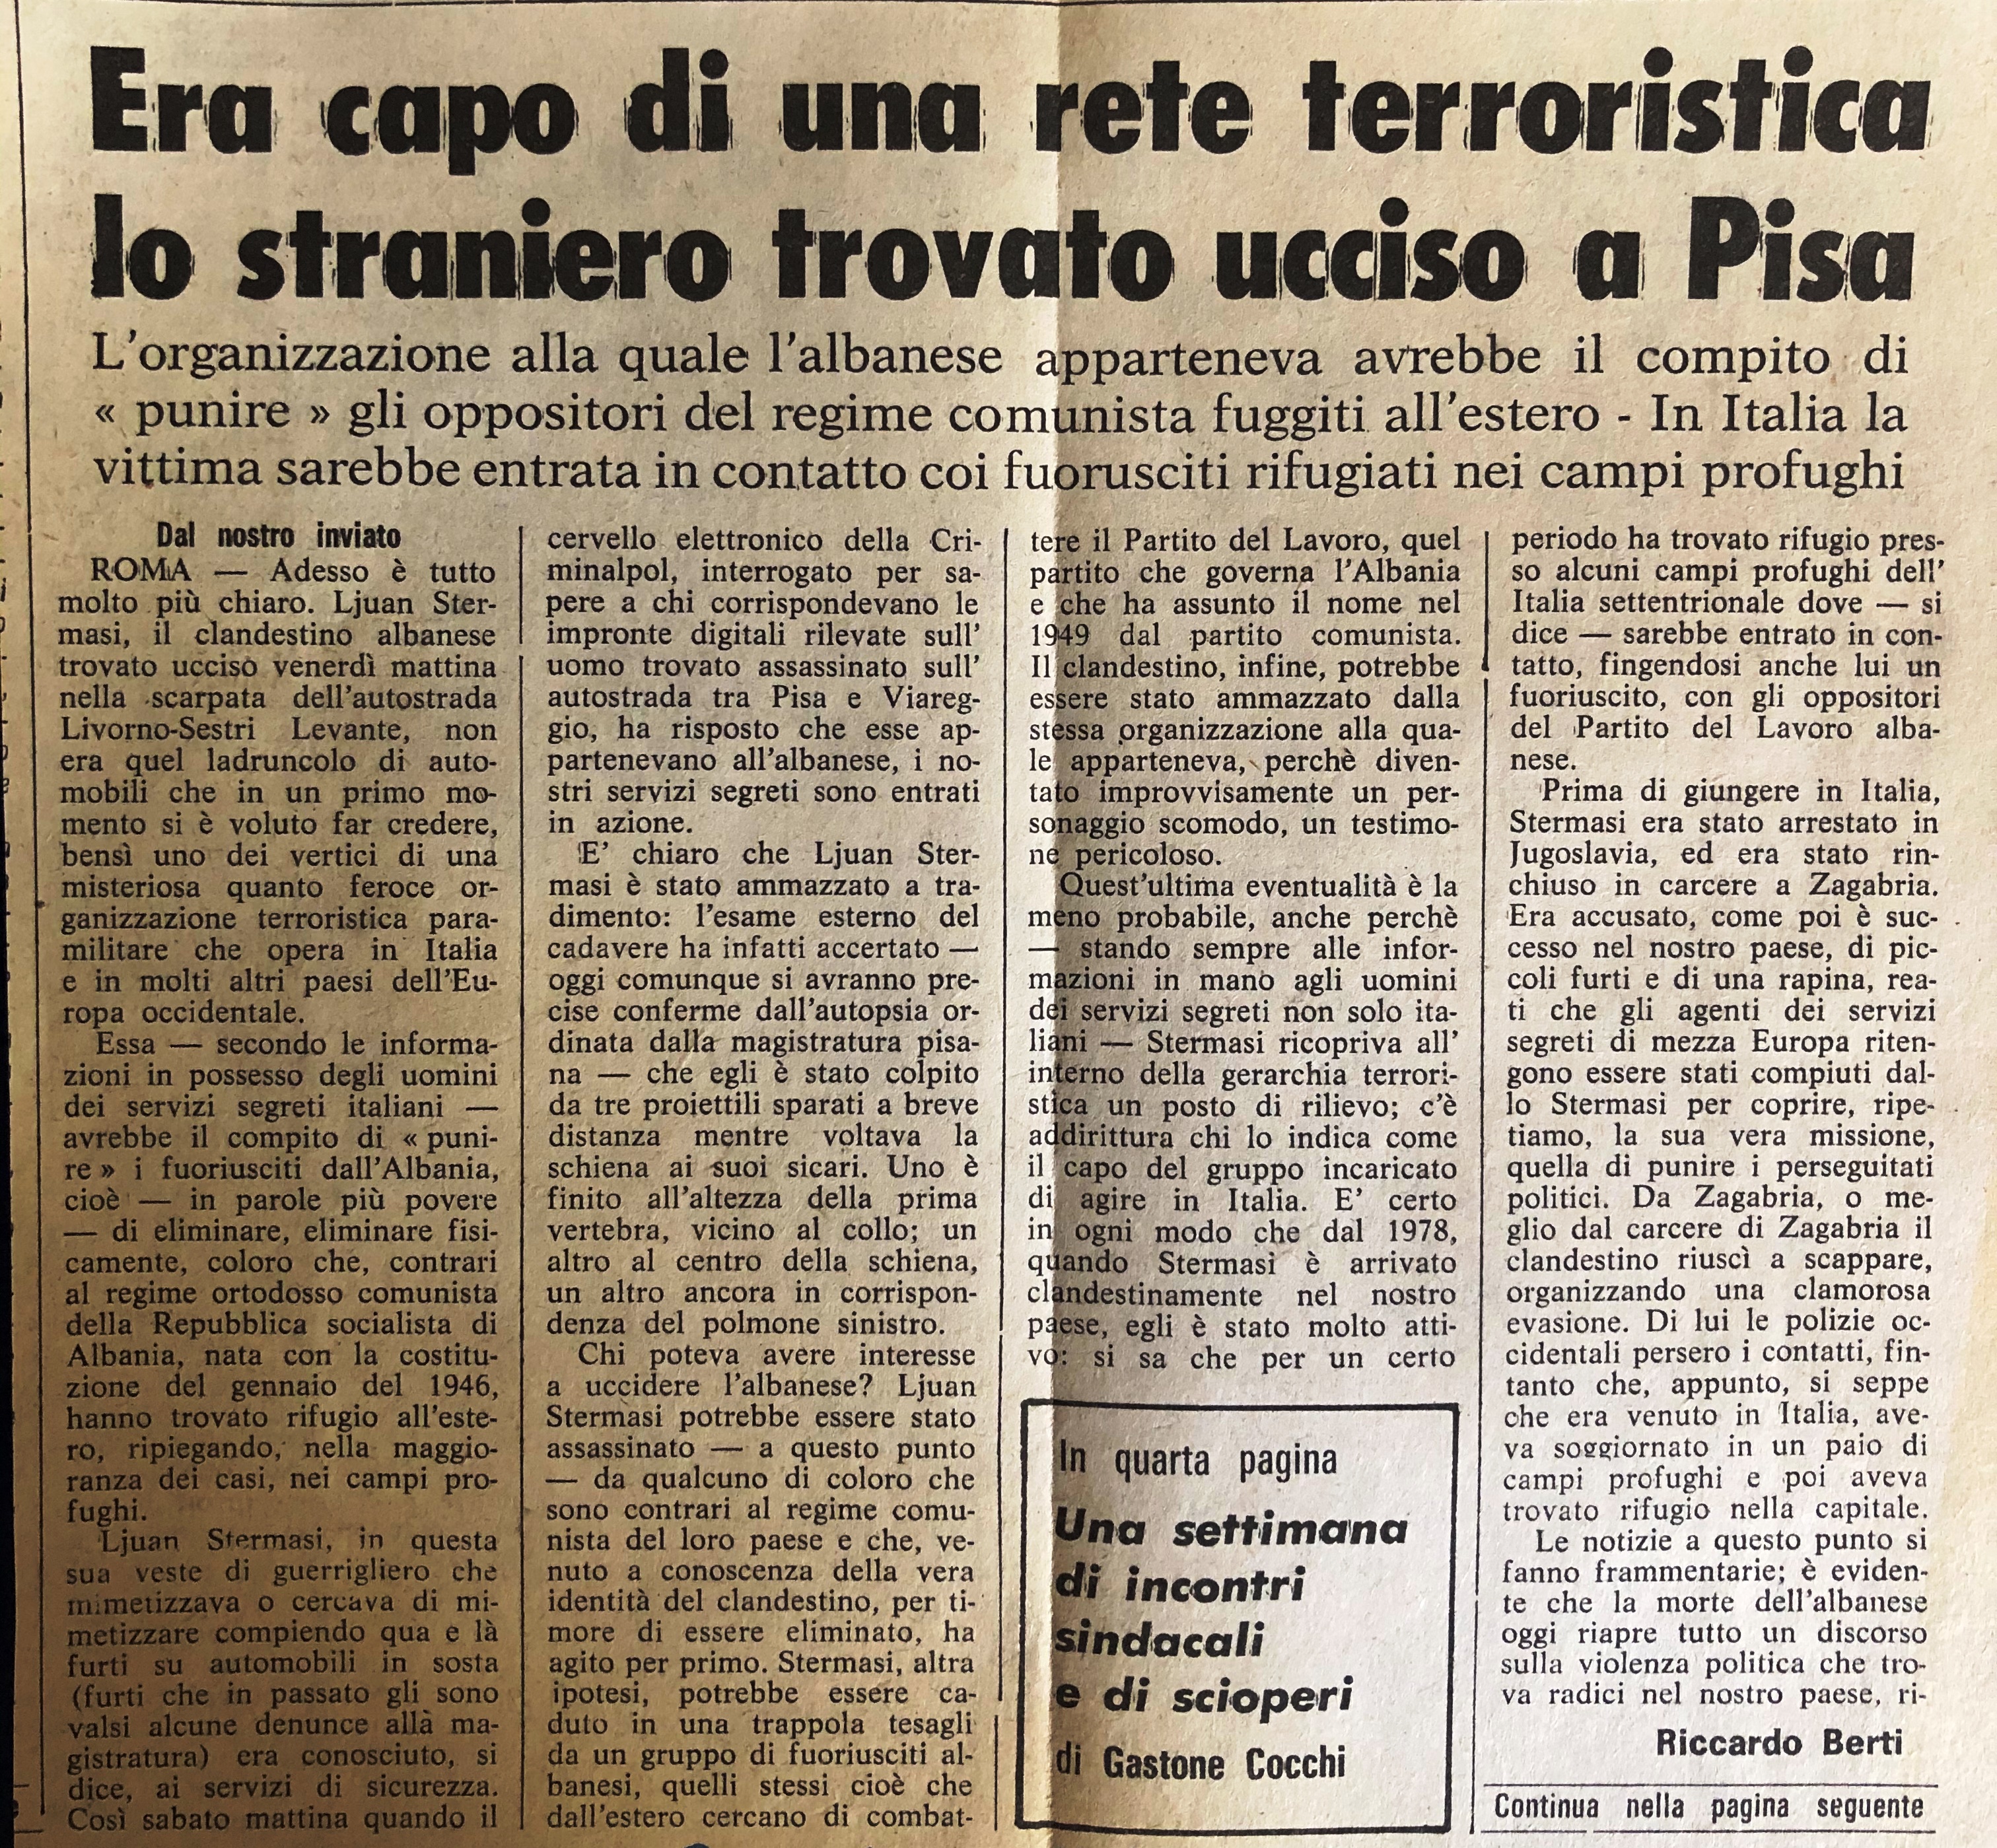 La Nazione di Firenze, 8 ottobre 1979 fq. 1,2